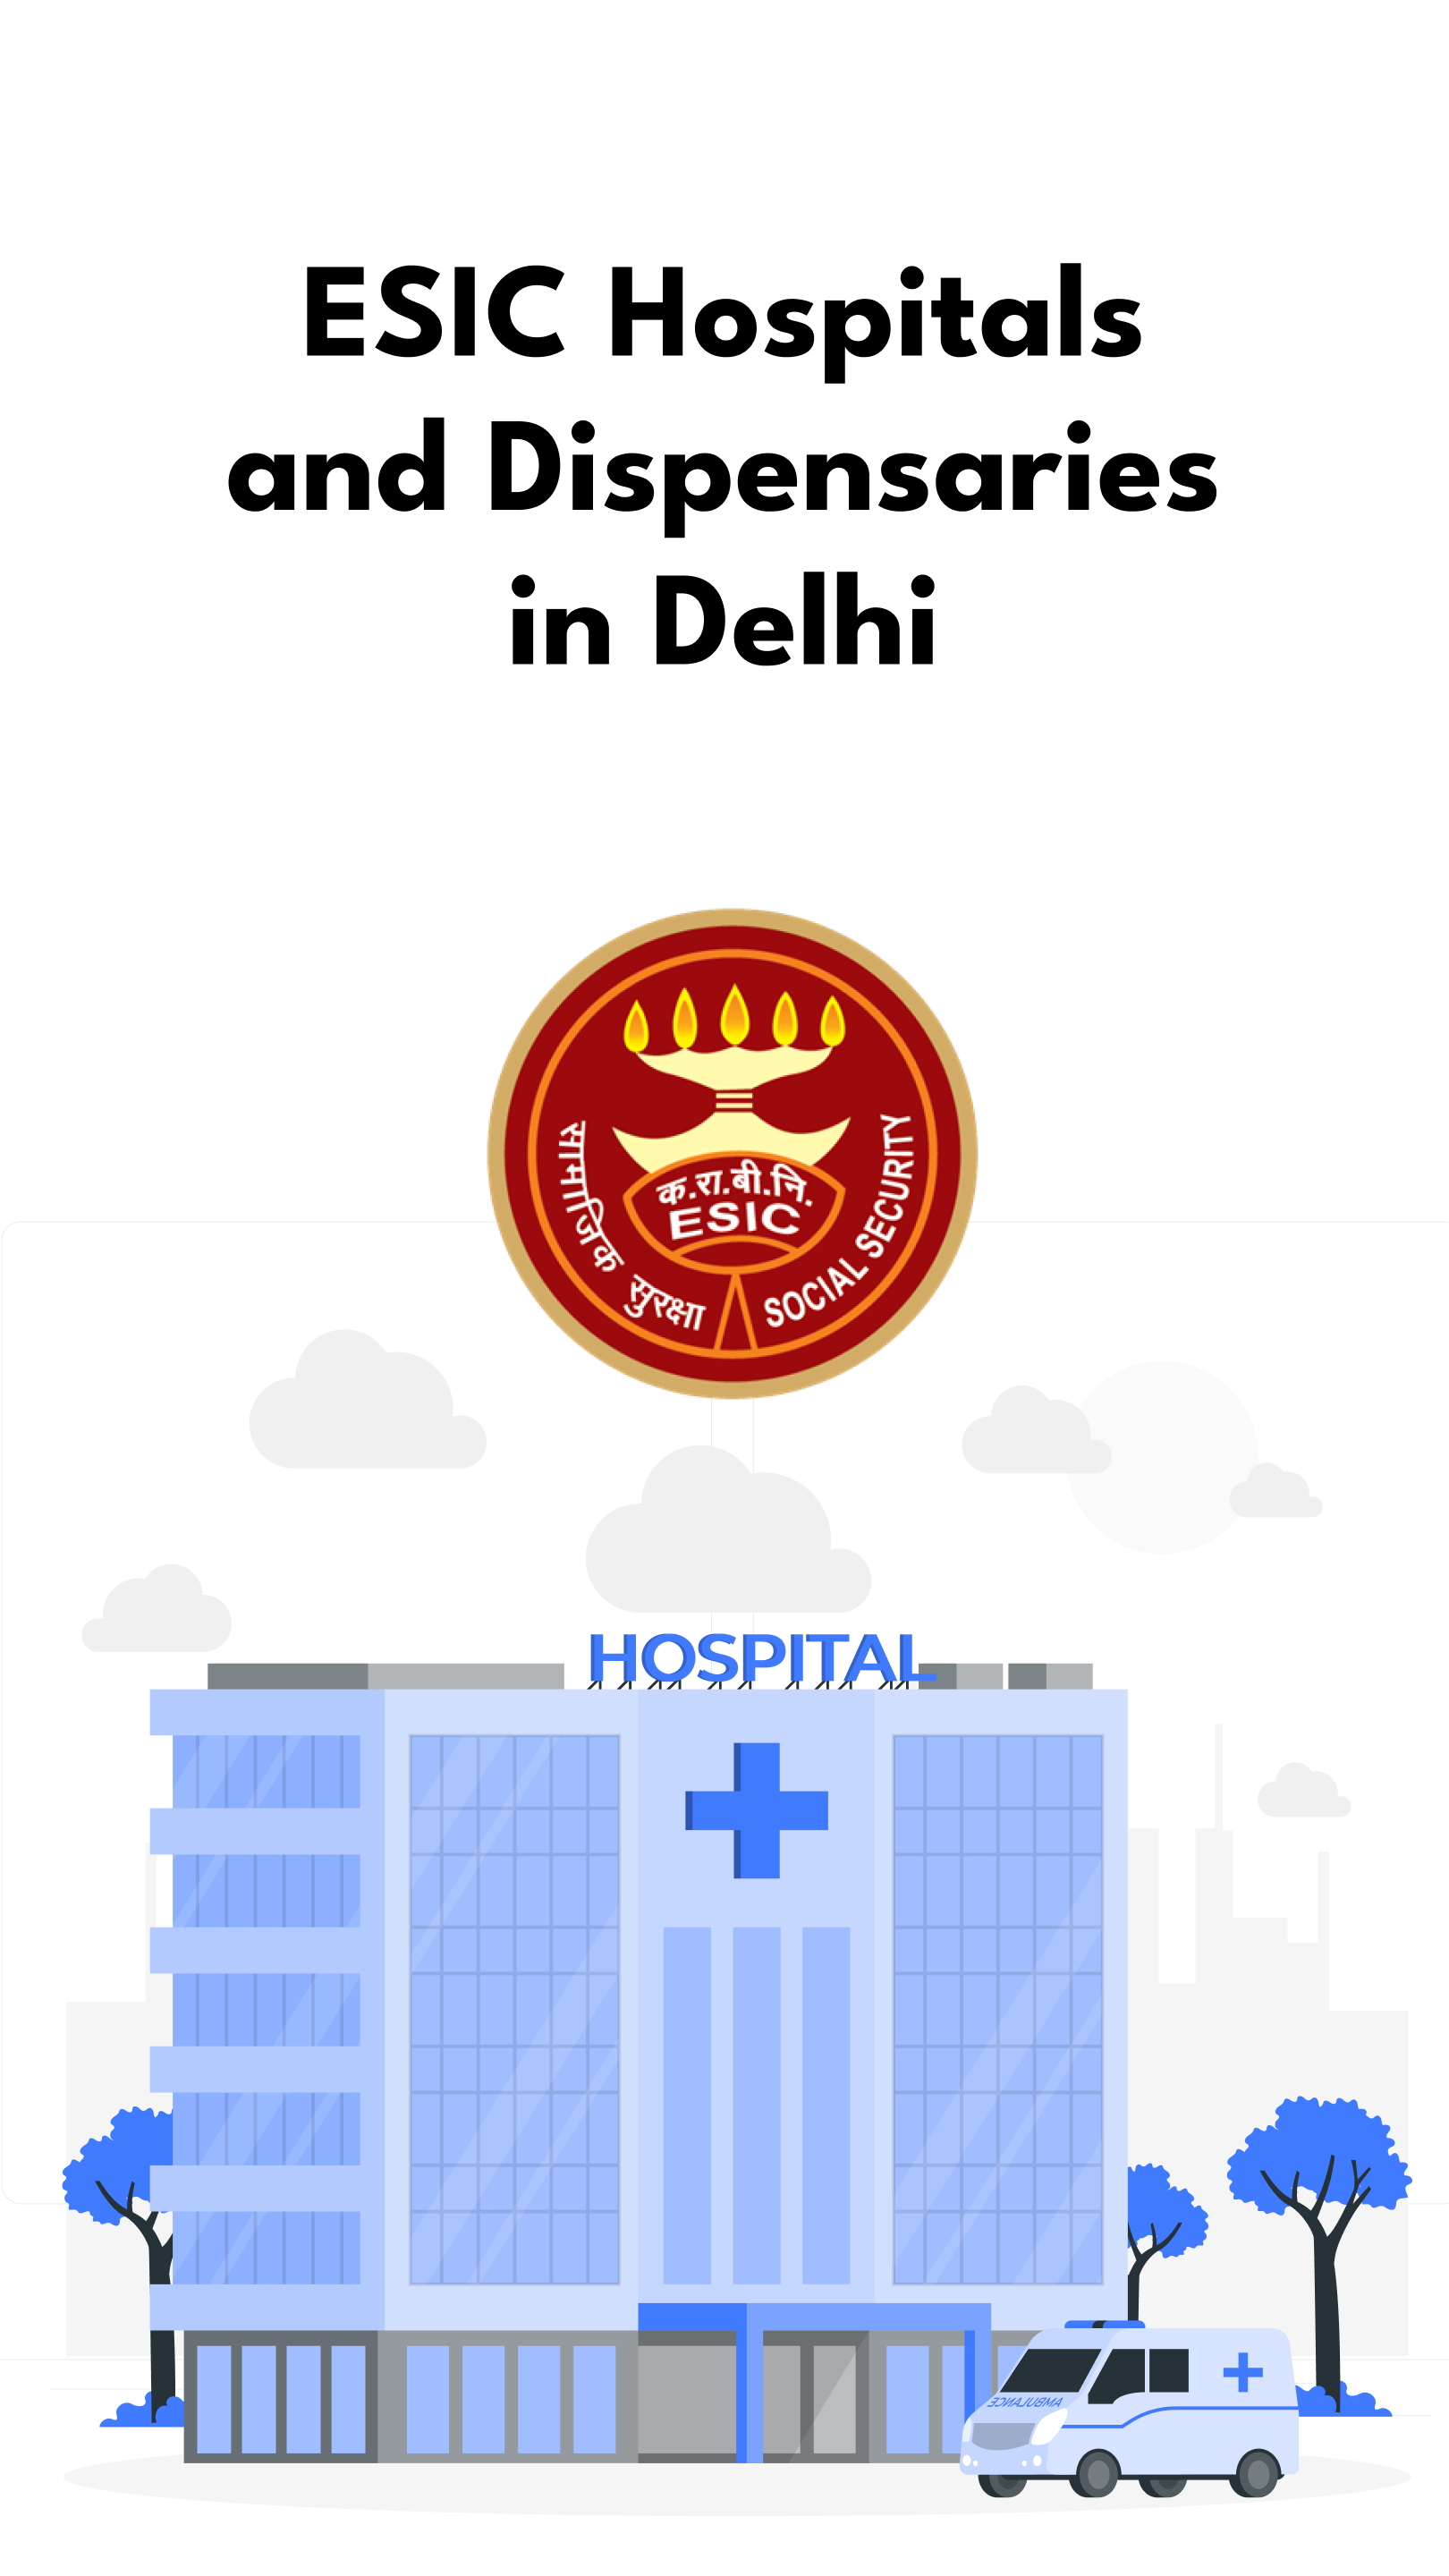 ESIC Hospitals and Dispensaries in Delhi